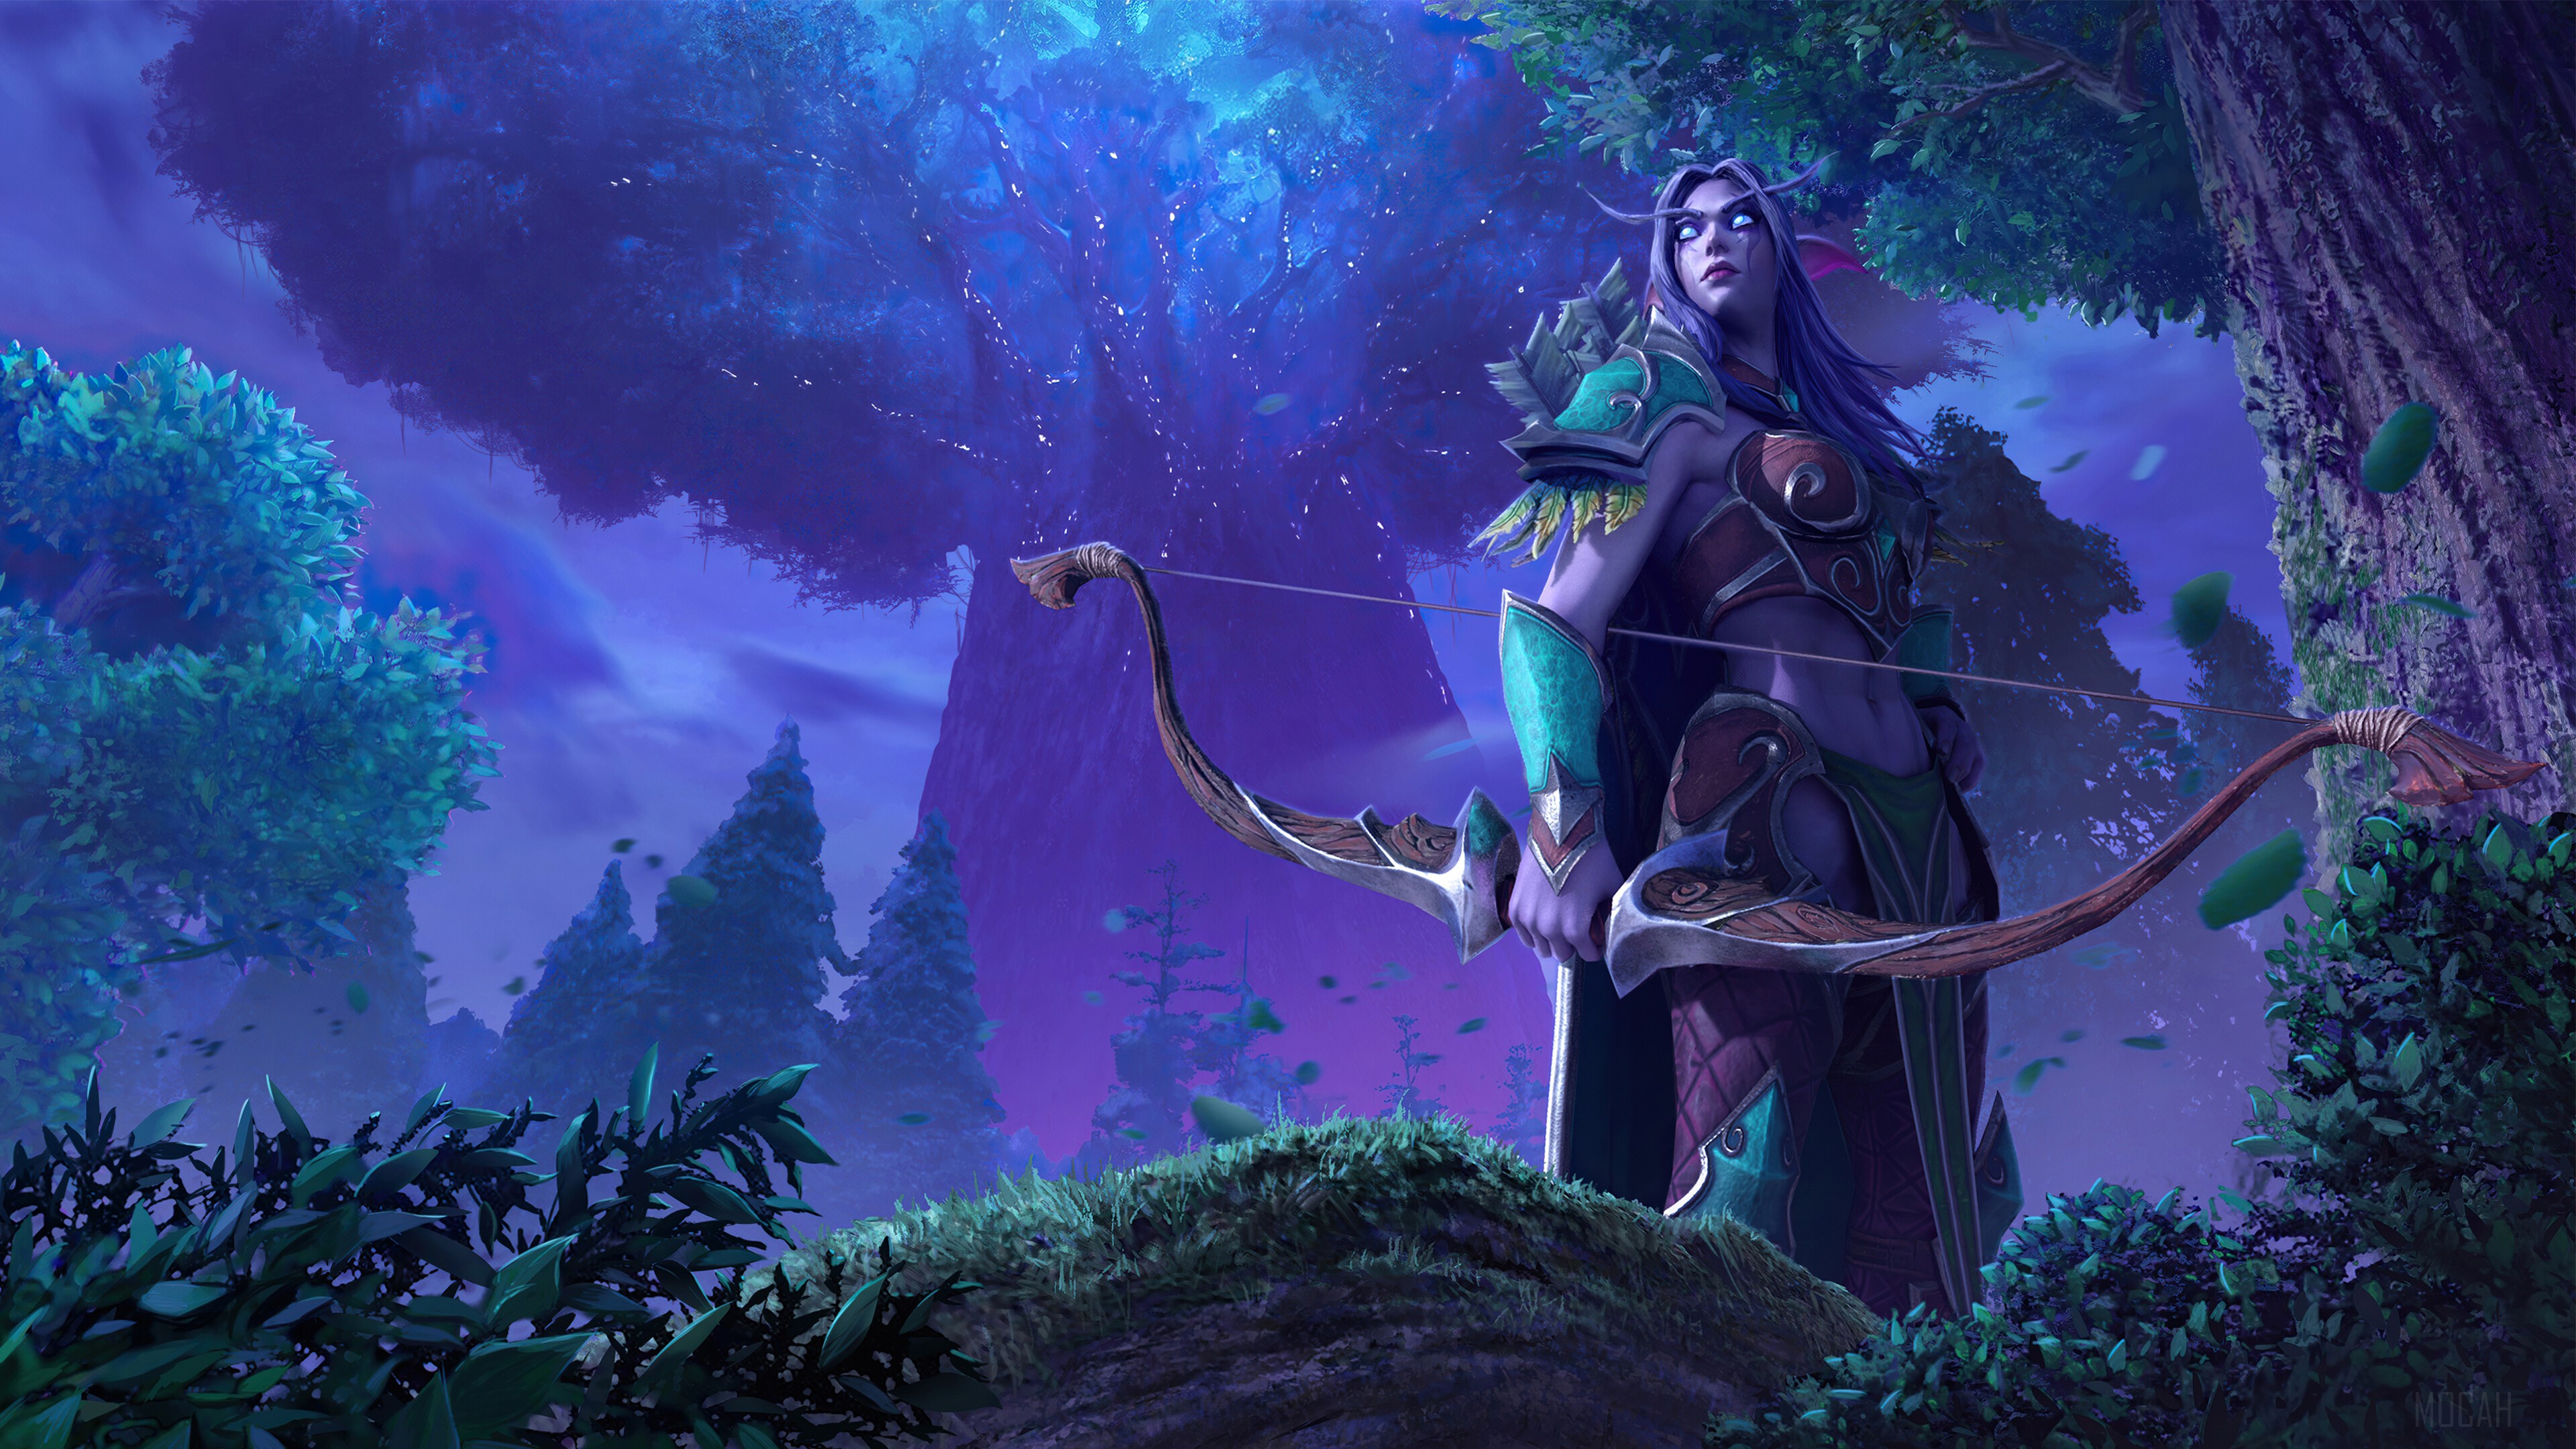 Night Elf Fantasy World Of Warcraft Wow Video Game 4k